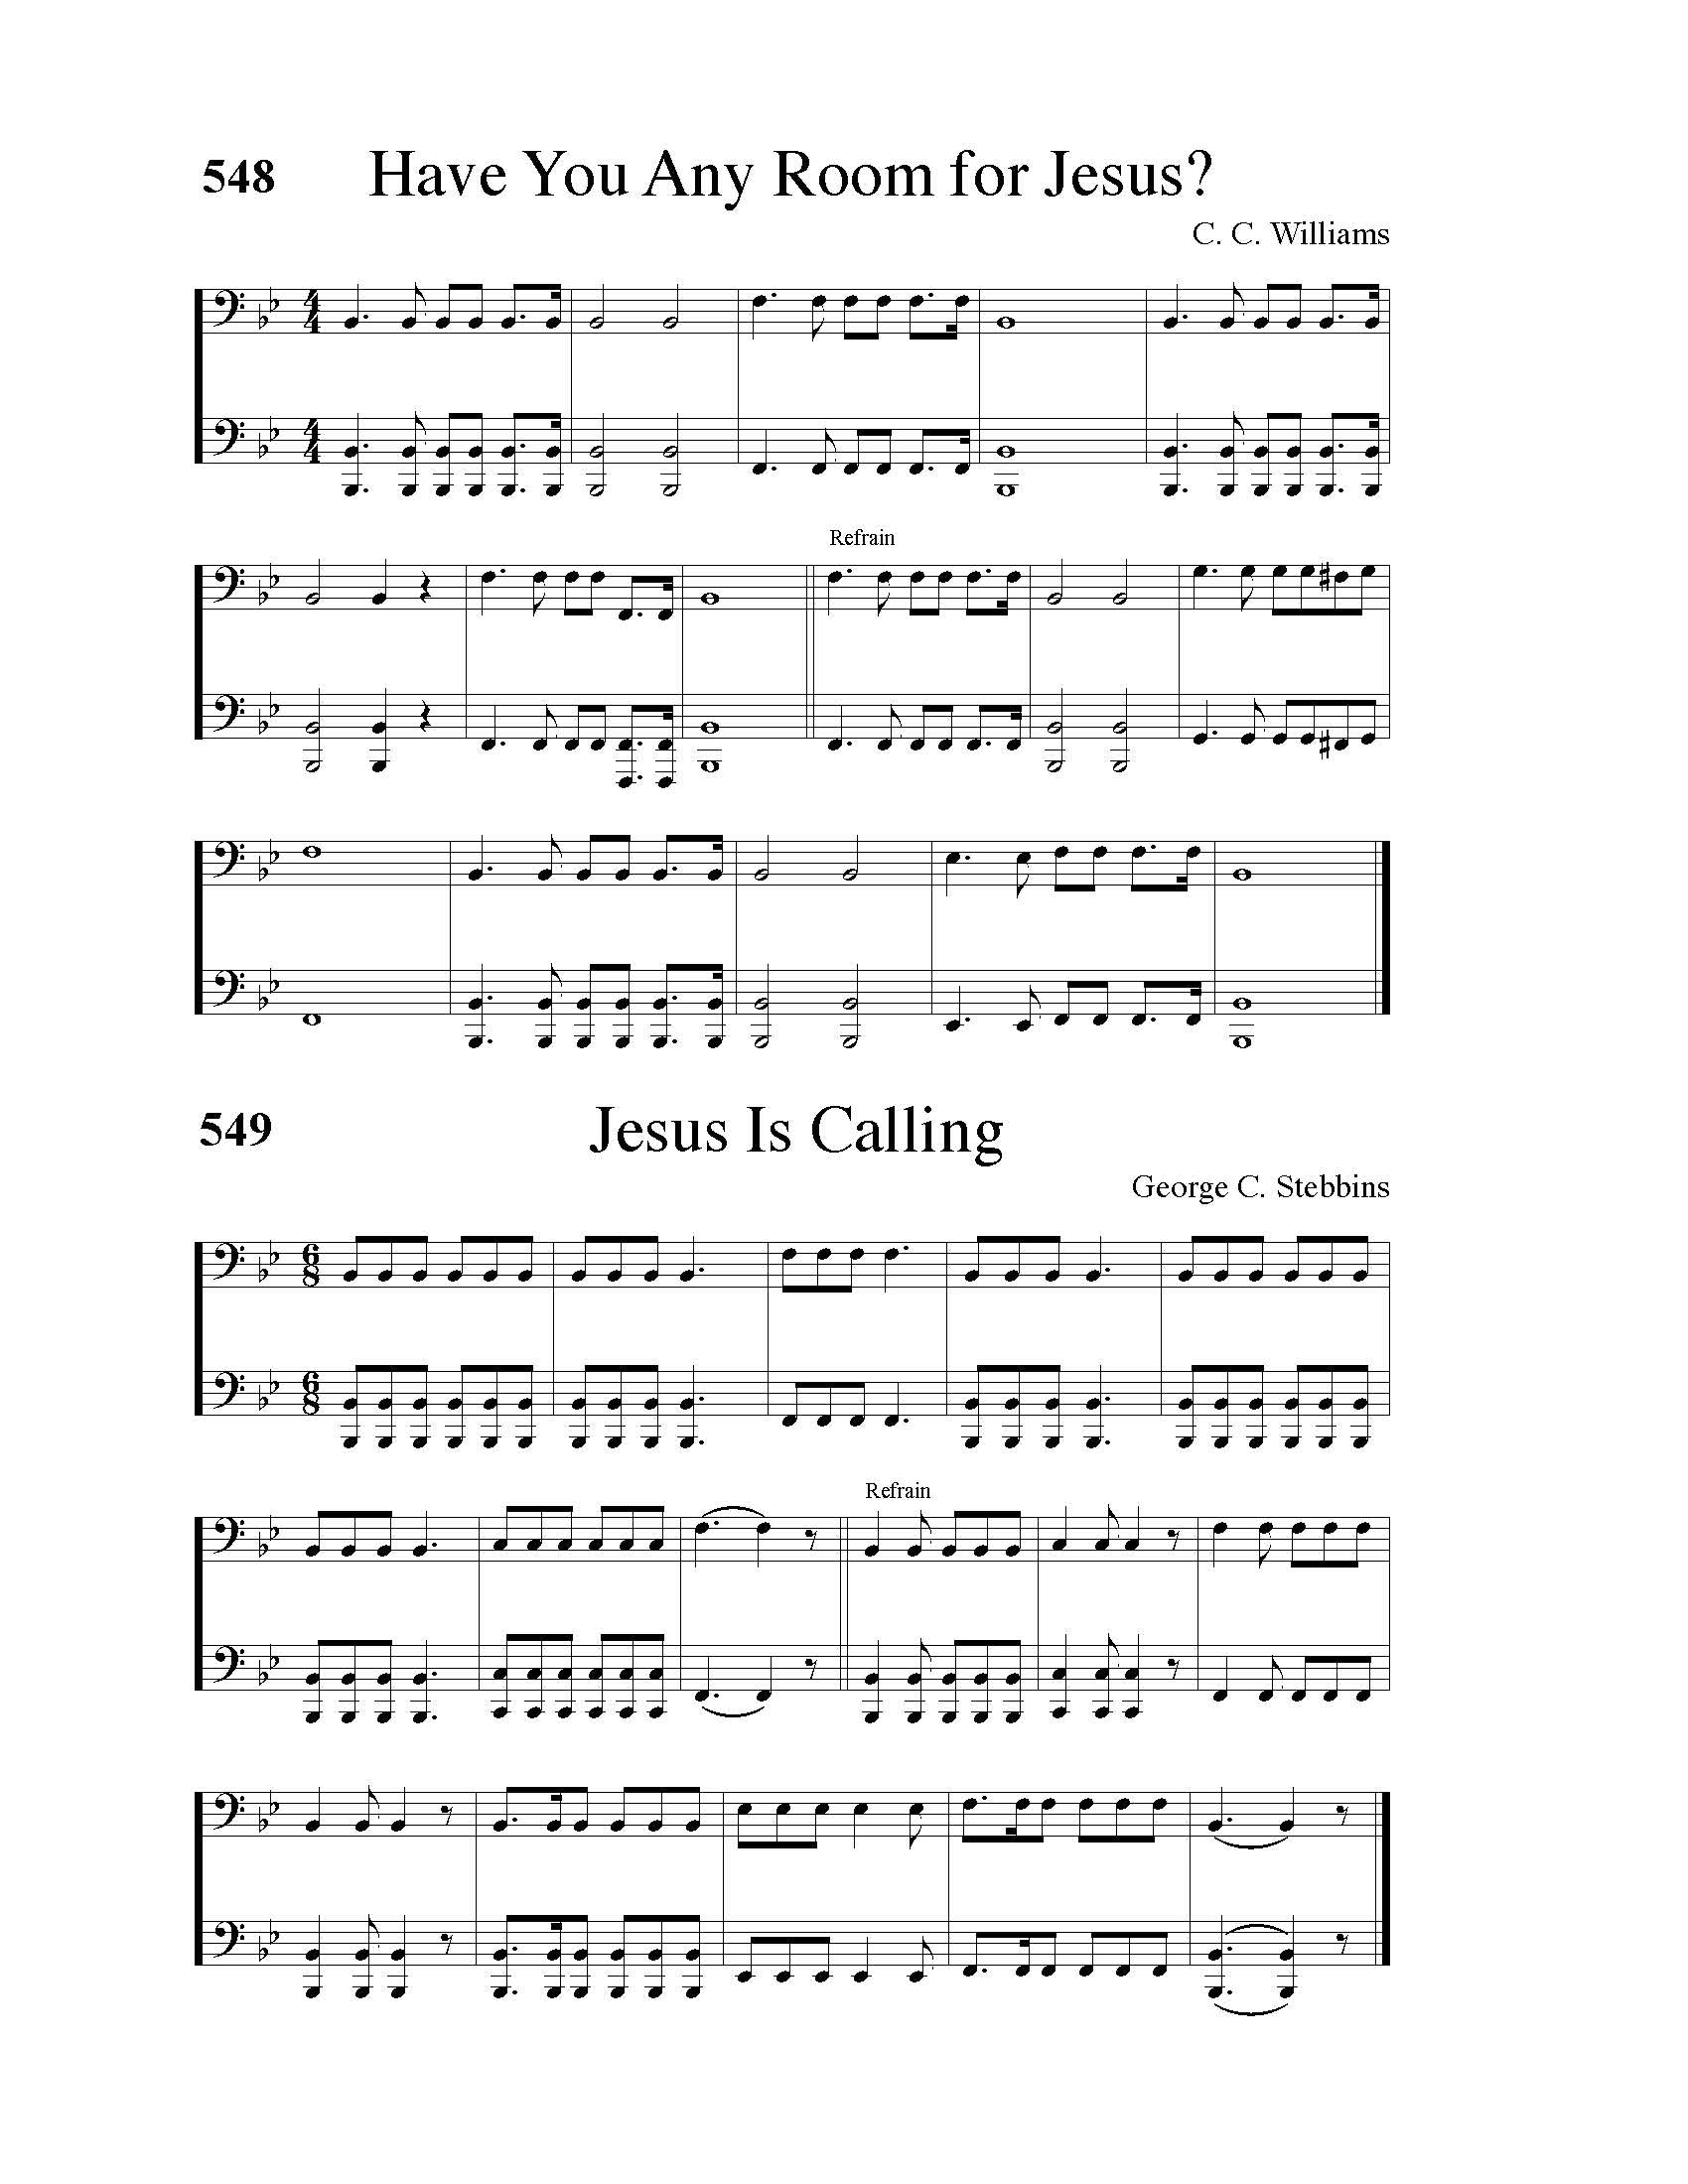 Living Hymns Orchestration: LH17 C (Trombone/Baritone B.C., Cello, Tuba, Bass)